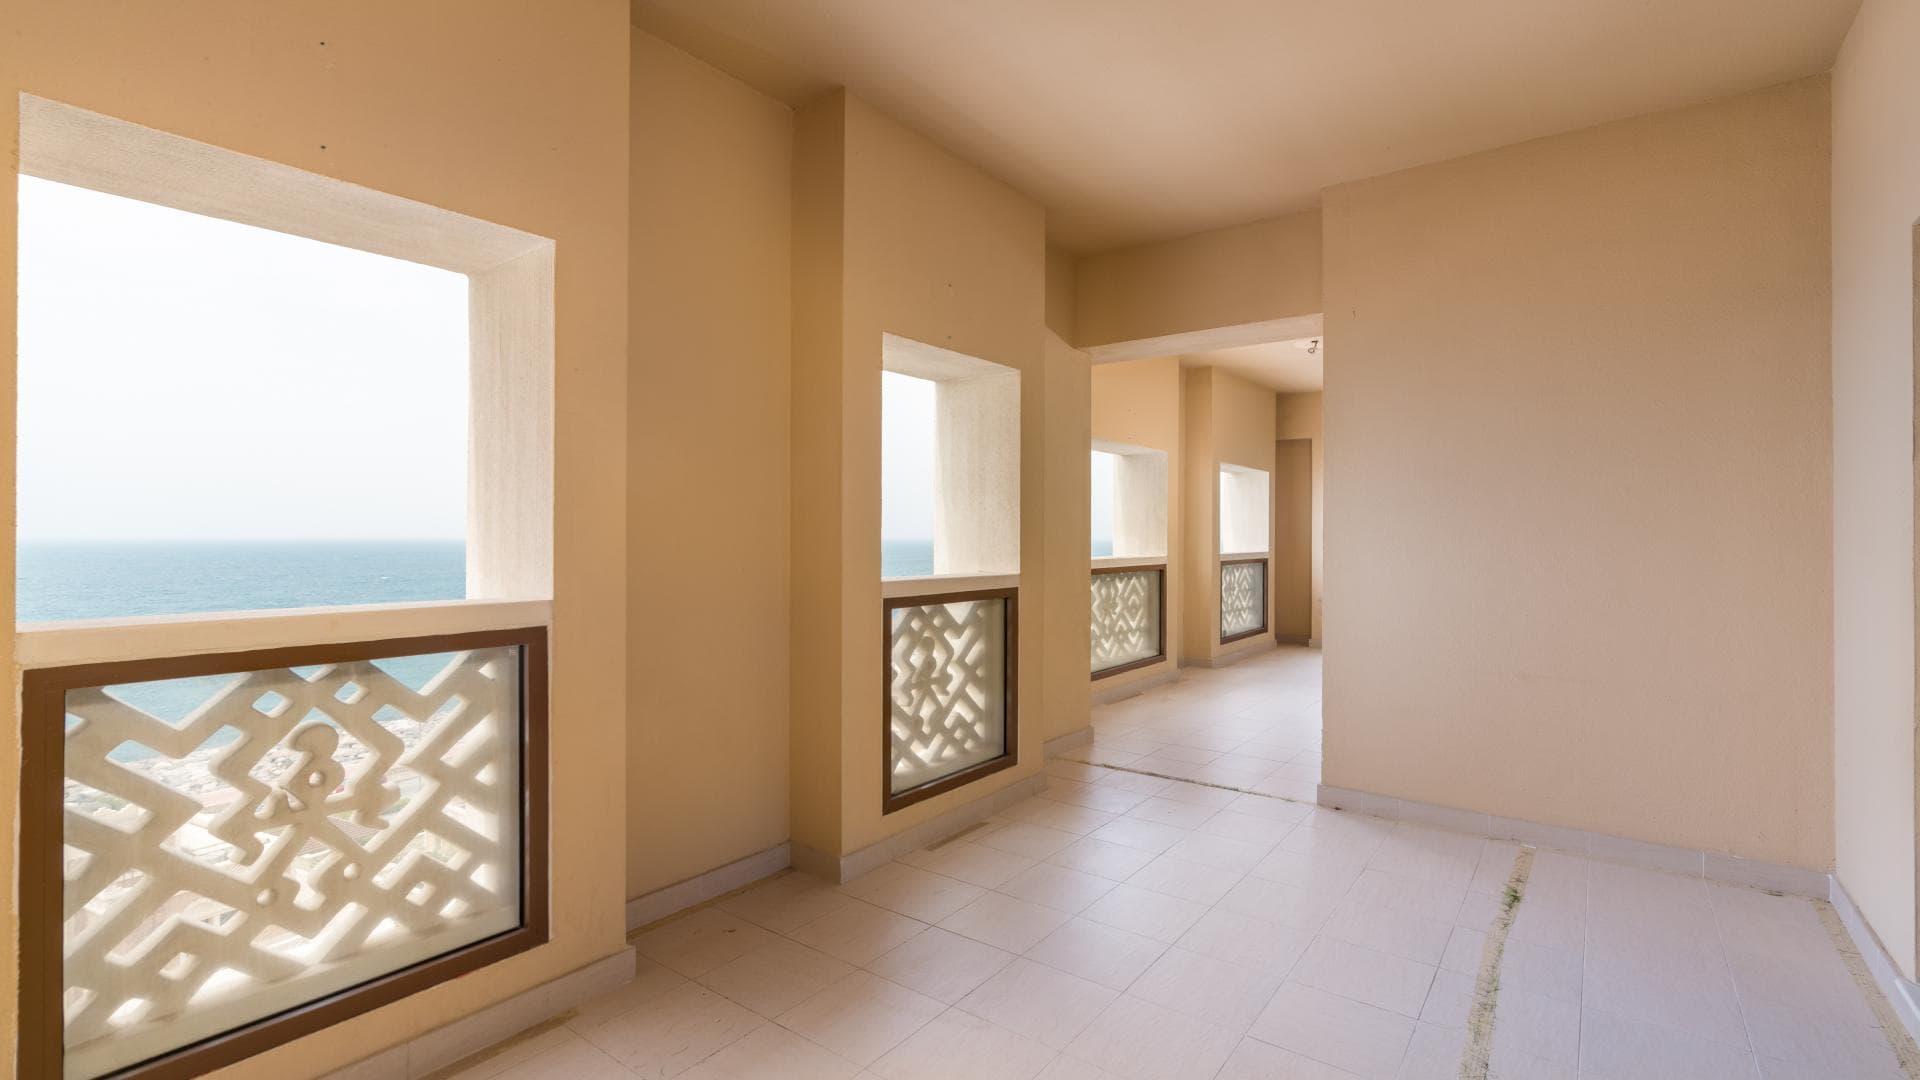 3 Bedroom Apartment For Rent Kingdom Of Sheba Lp19023 2ad9f2bbd5b3da00.jpg